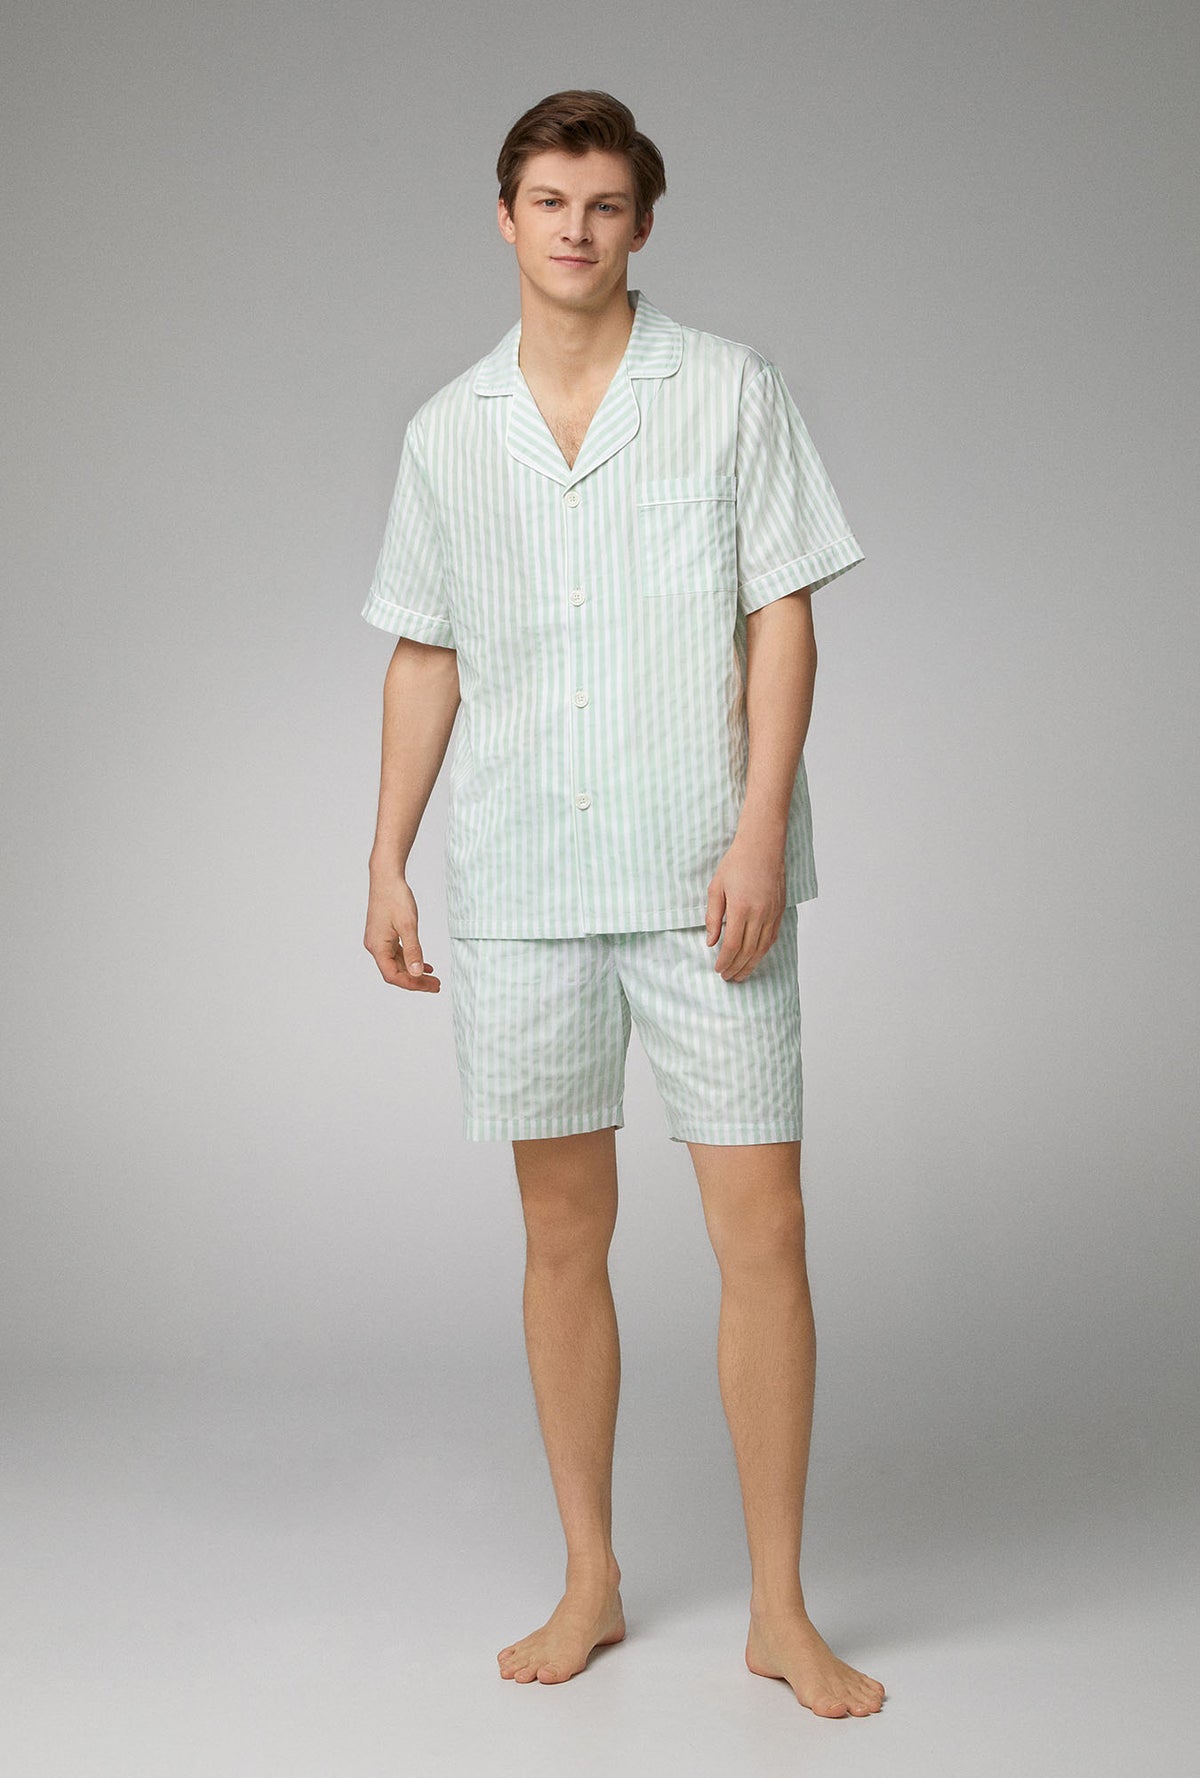 A men wearing  Short Sleeve Notch Woven Cotton Poplin Short PJ Set with Mint 3D Stripe print